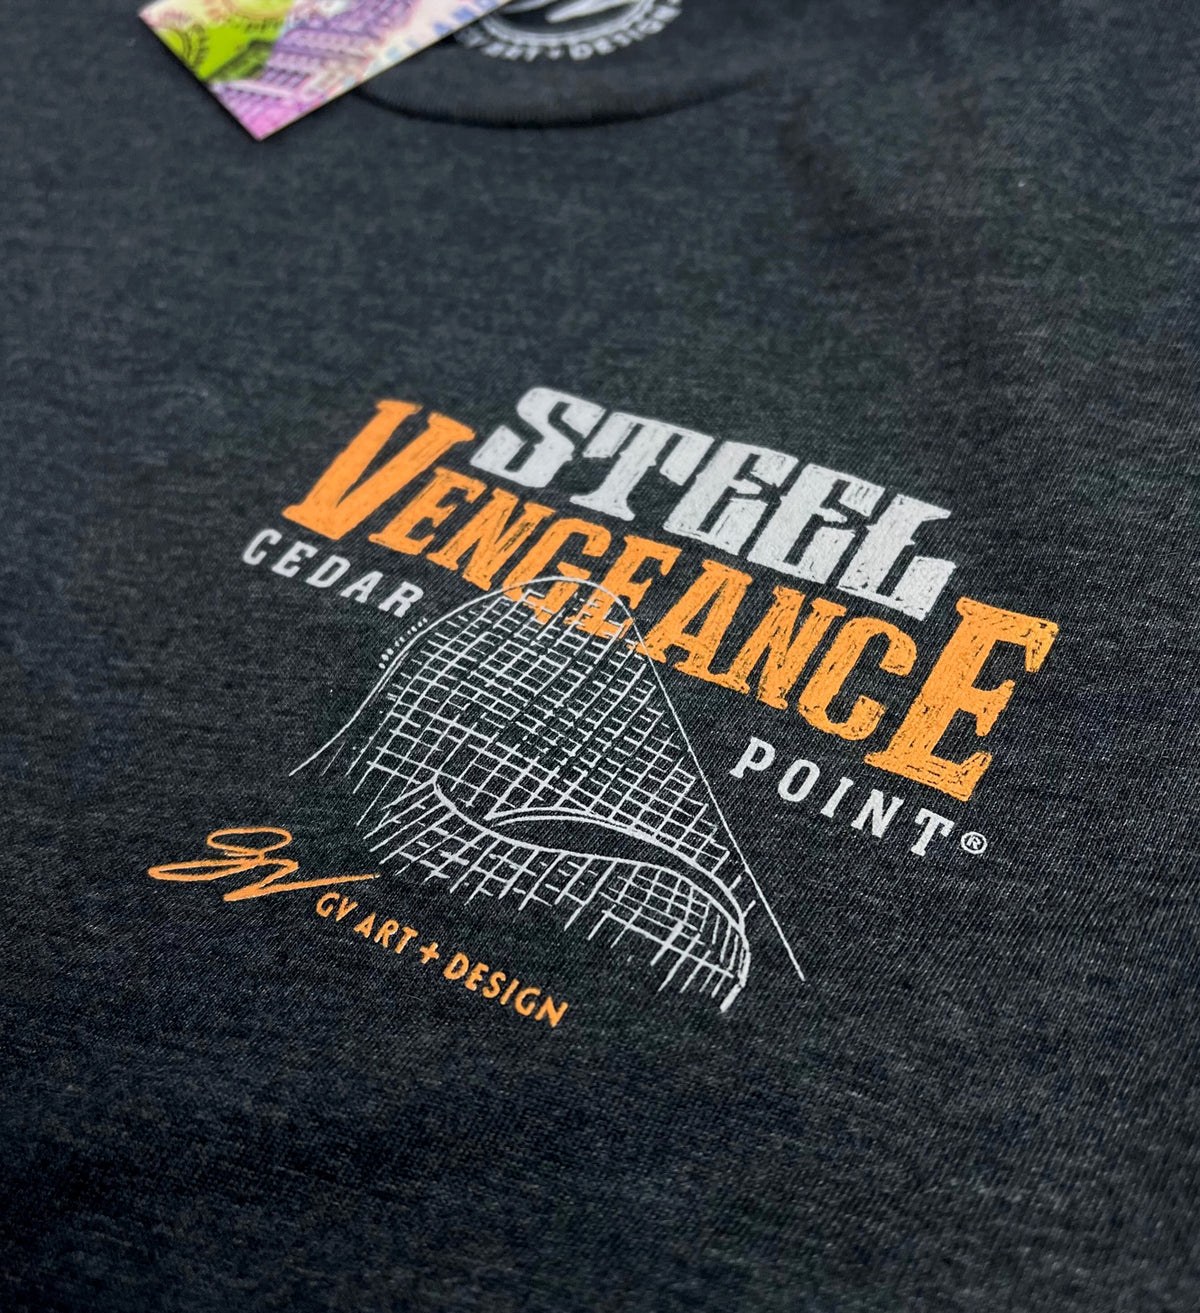 Steel Vengeance Stamp T shirt